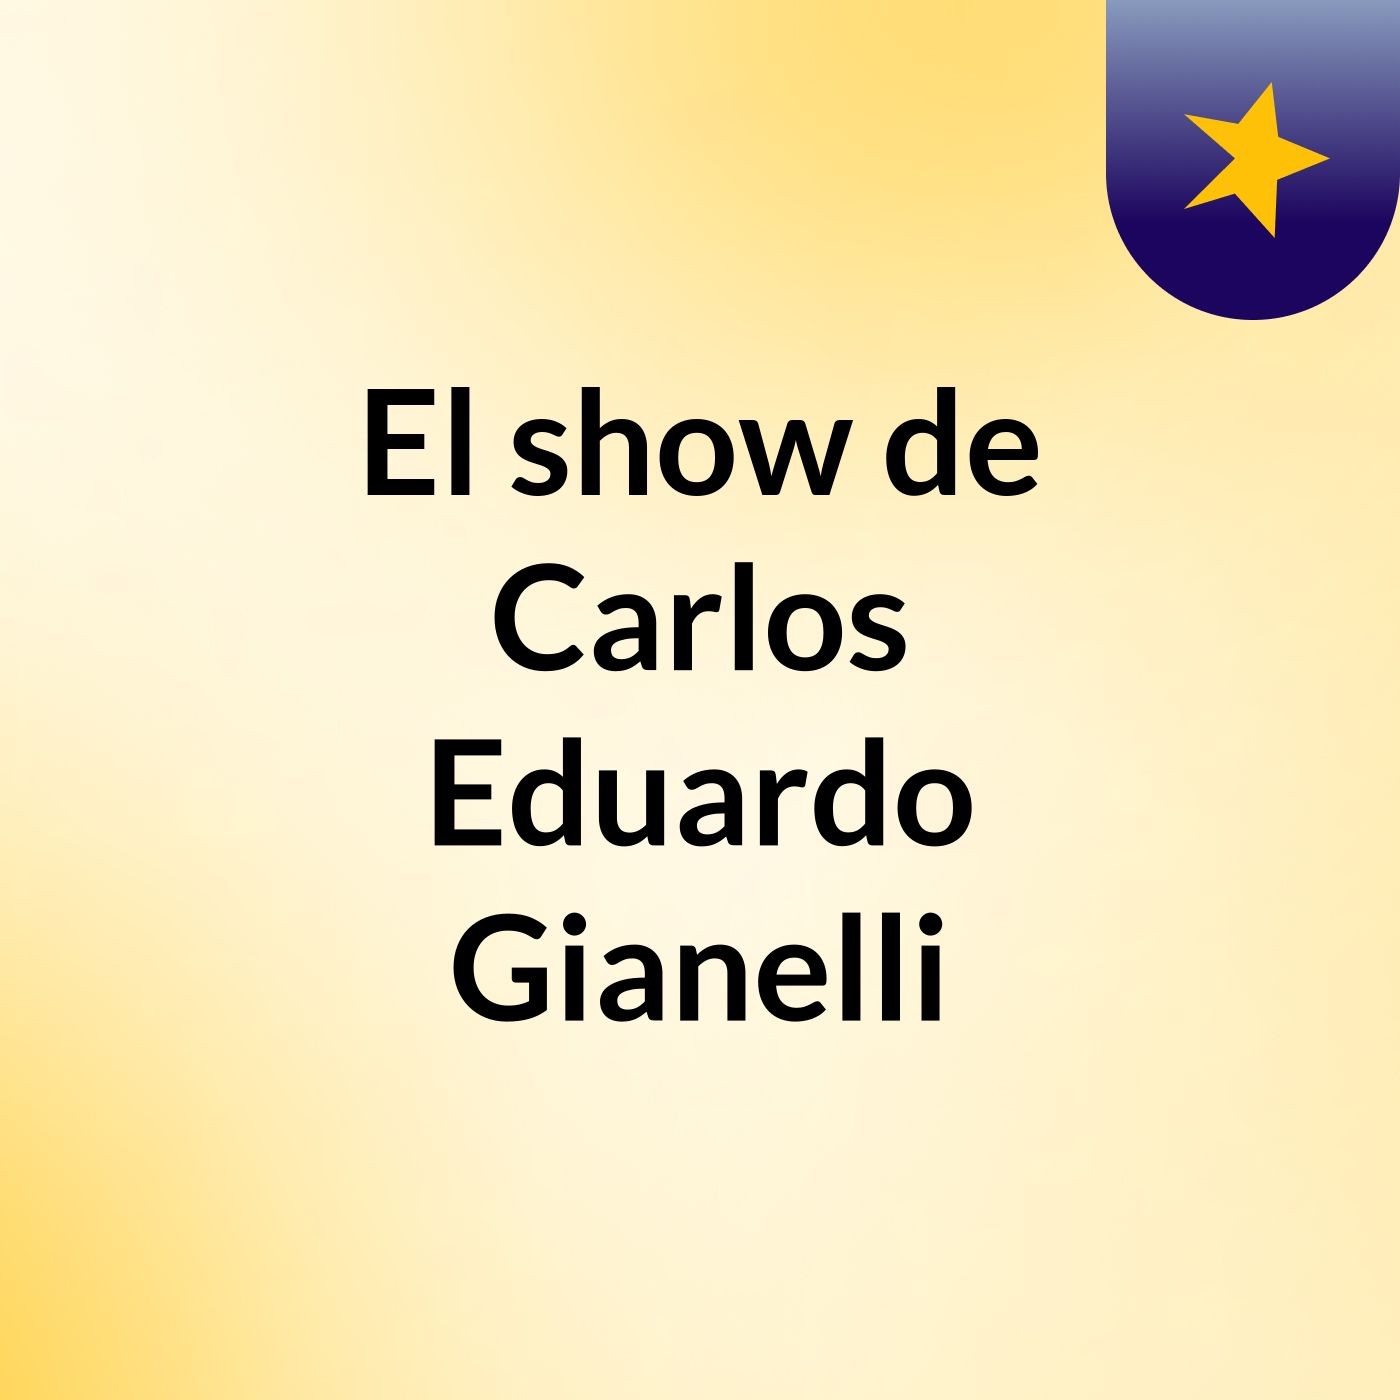 El show de Carlos Eduardo Gianelli